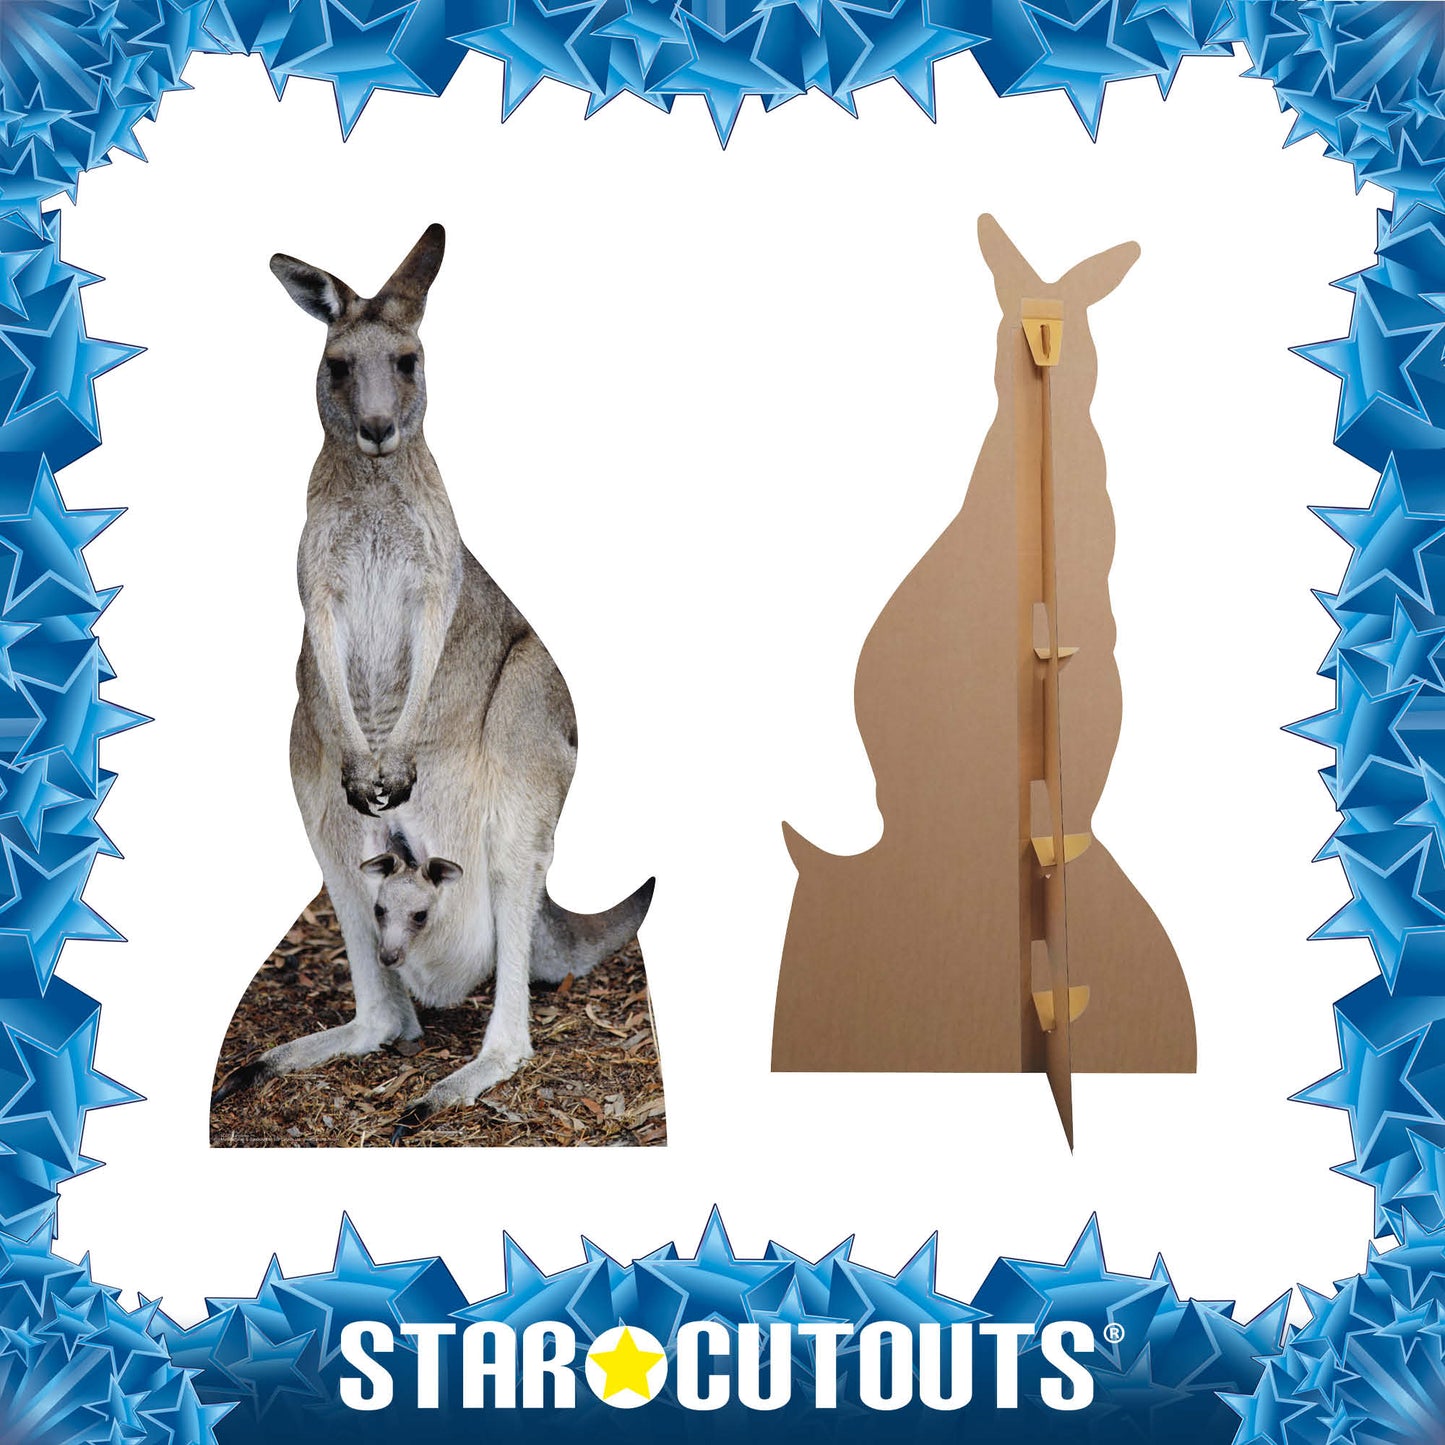 Kangaroo Australia Wildlife Theme Animal Cardboard Cutout